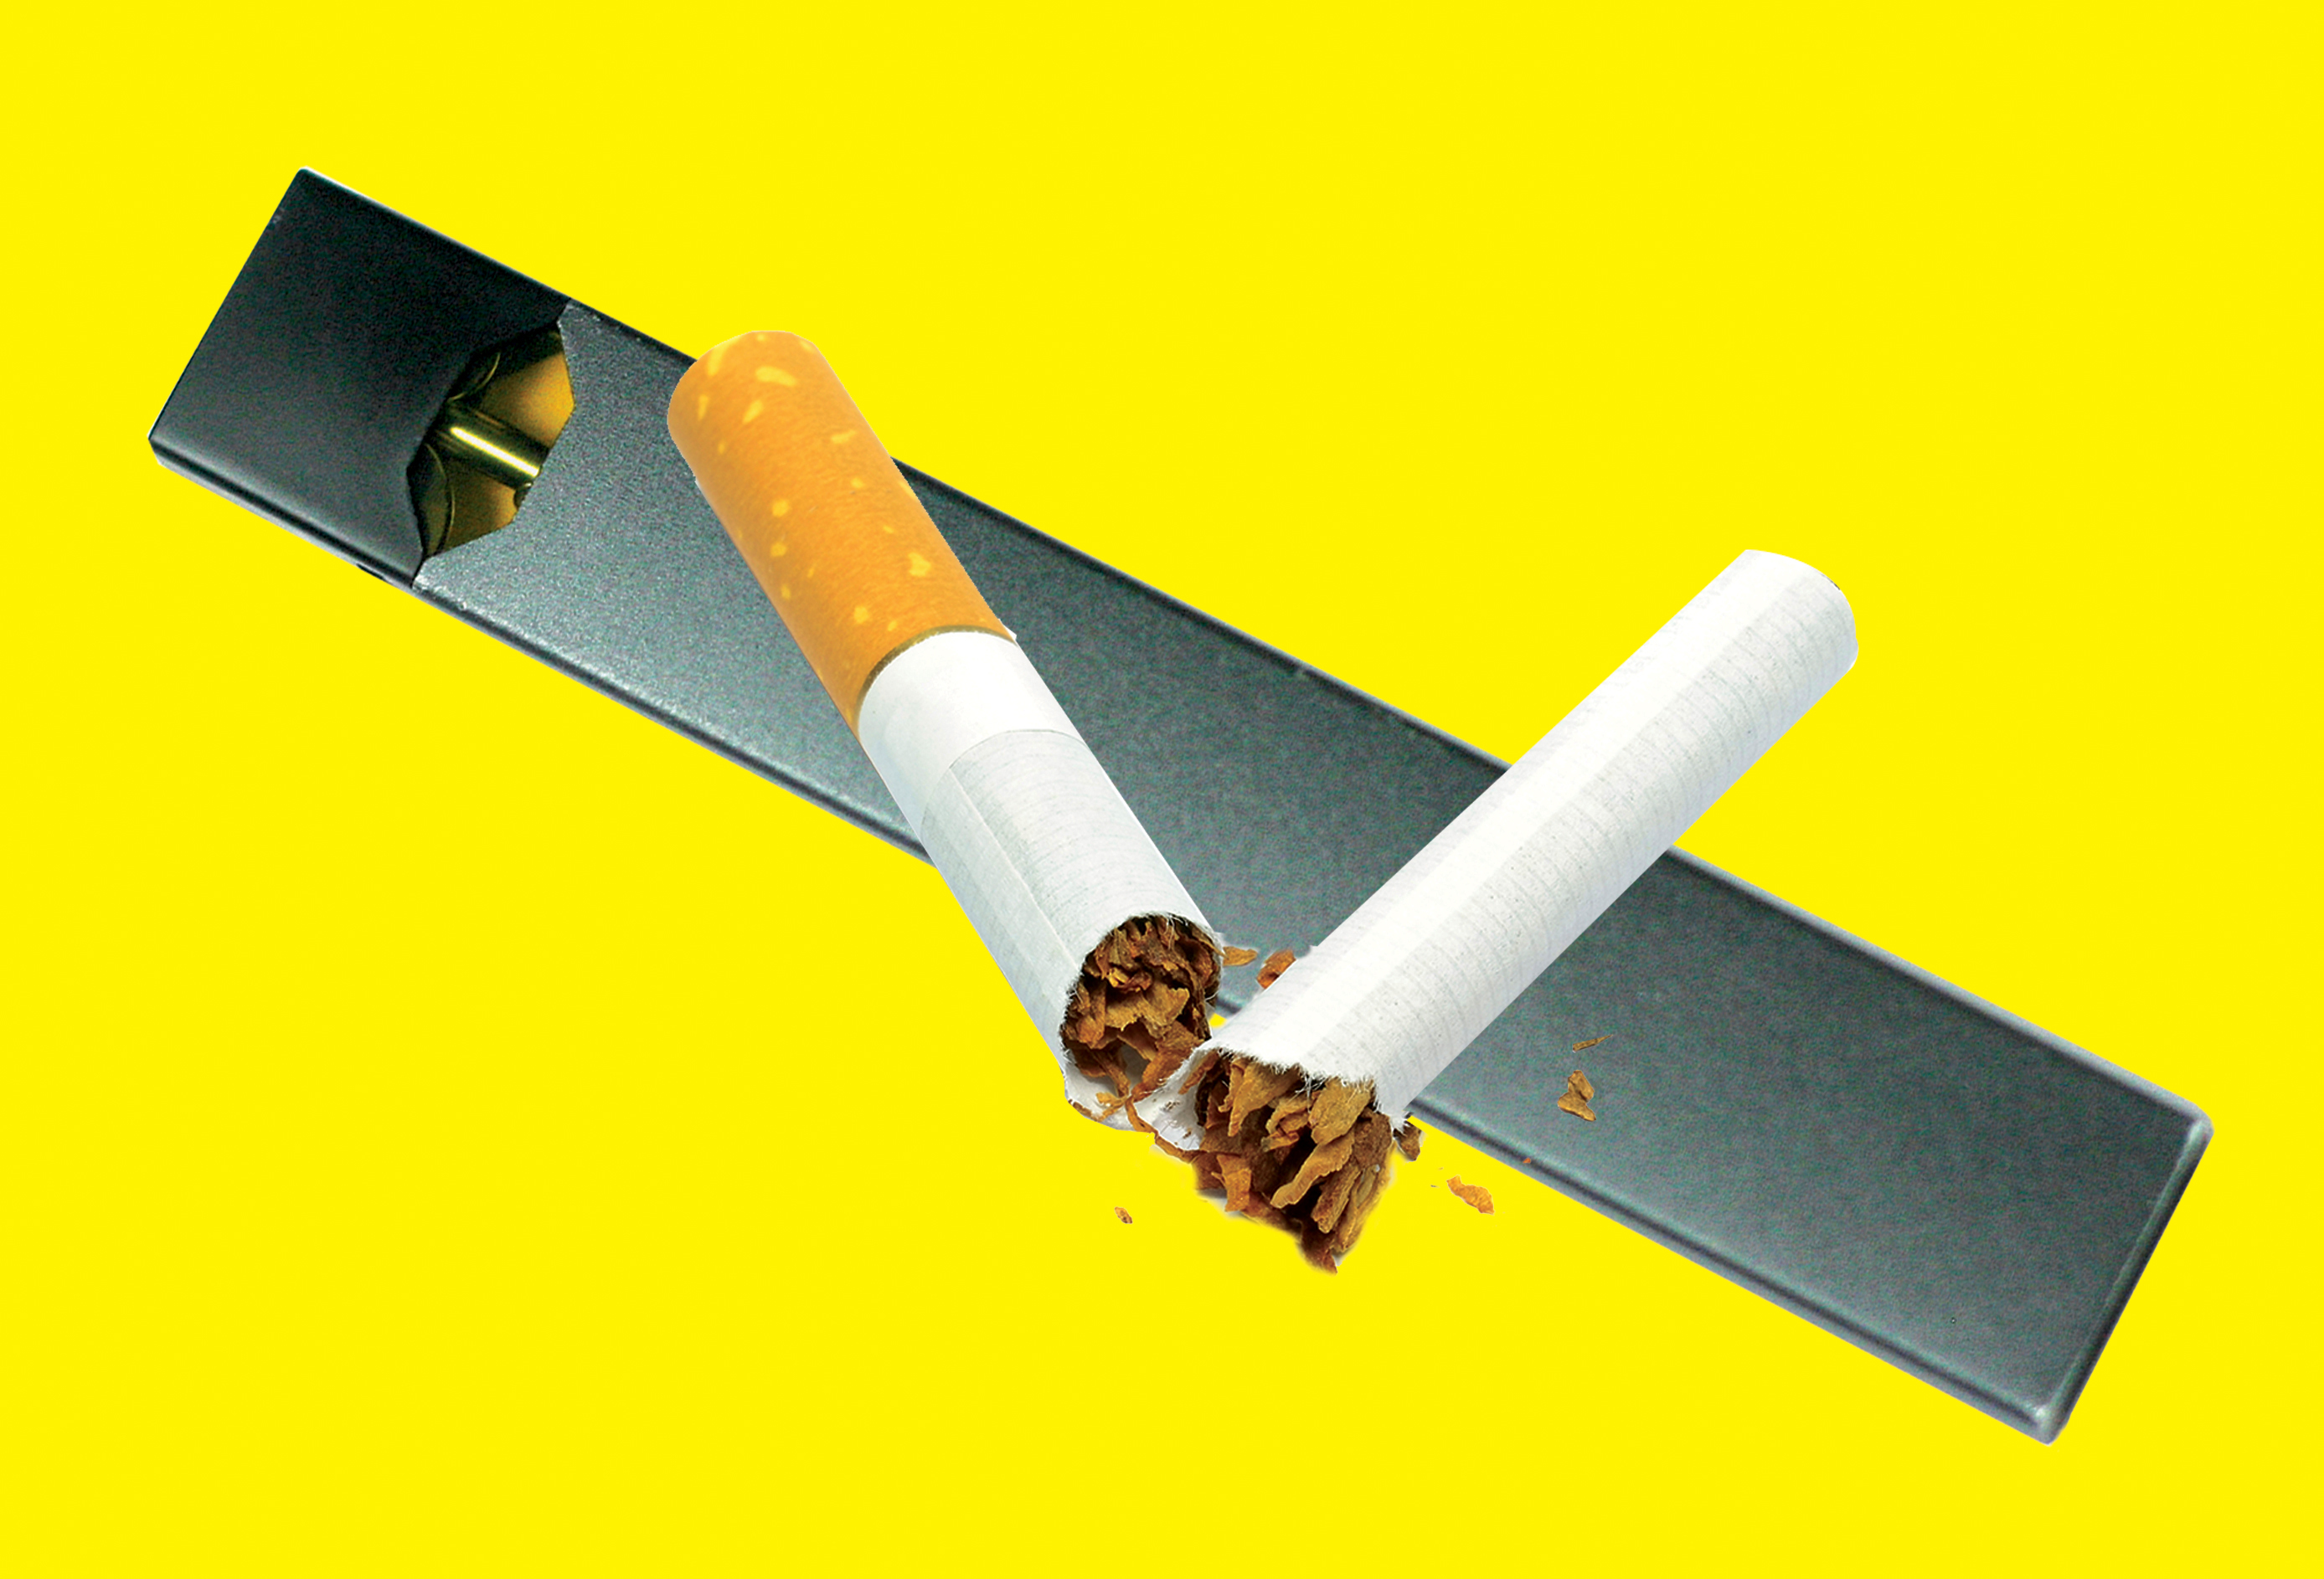 Benefits of Ecigs: An Alternative to Smoking